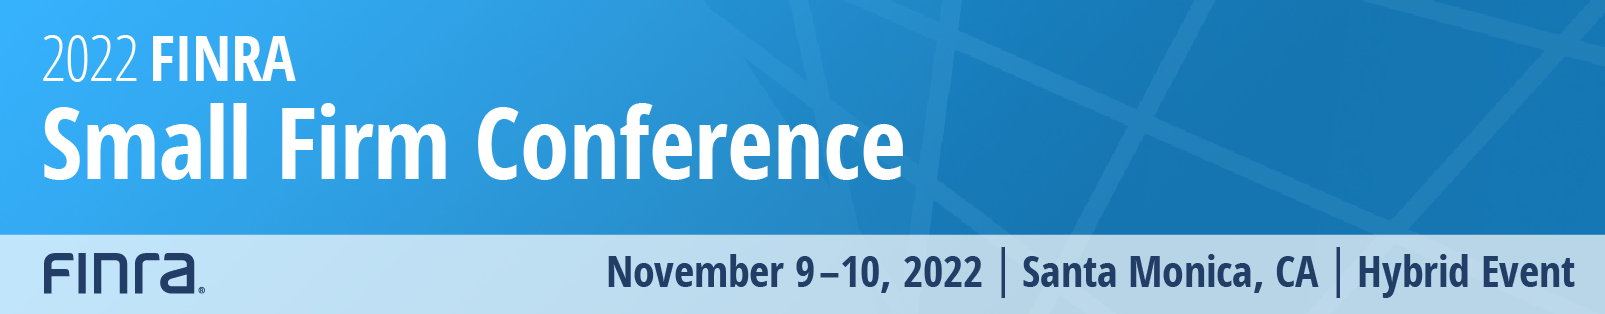 2022 Small Firm Conference | November 9 - 10 | Santa Monica, CA